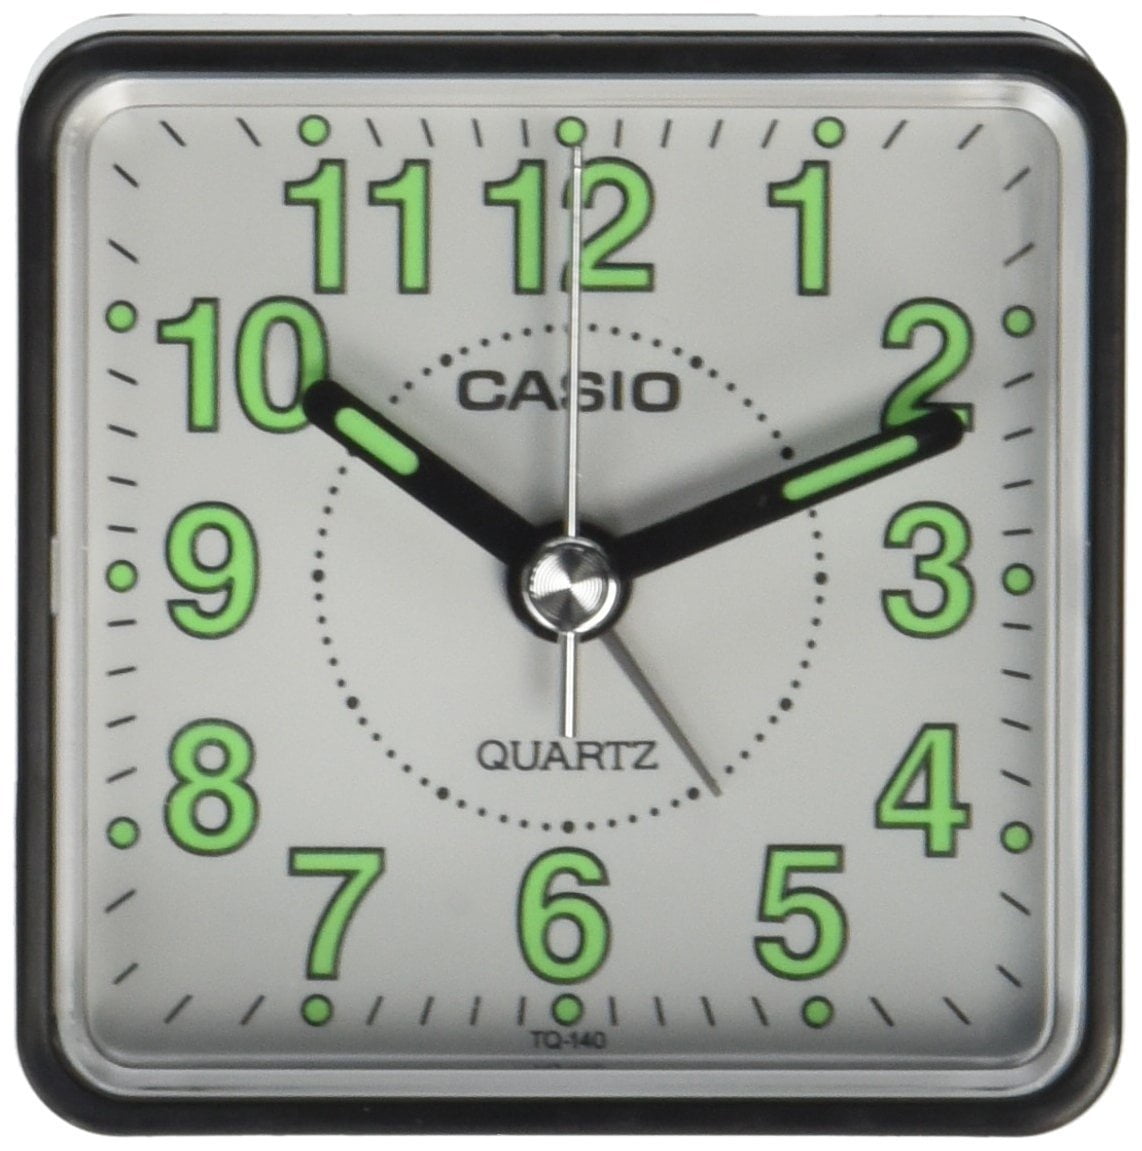 Casio TQ140 Travel Quartz Analogue Bedside Desk Beep Wake Up Alarm Clock White 